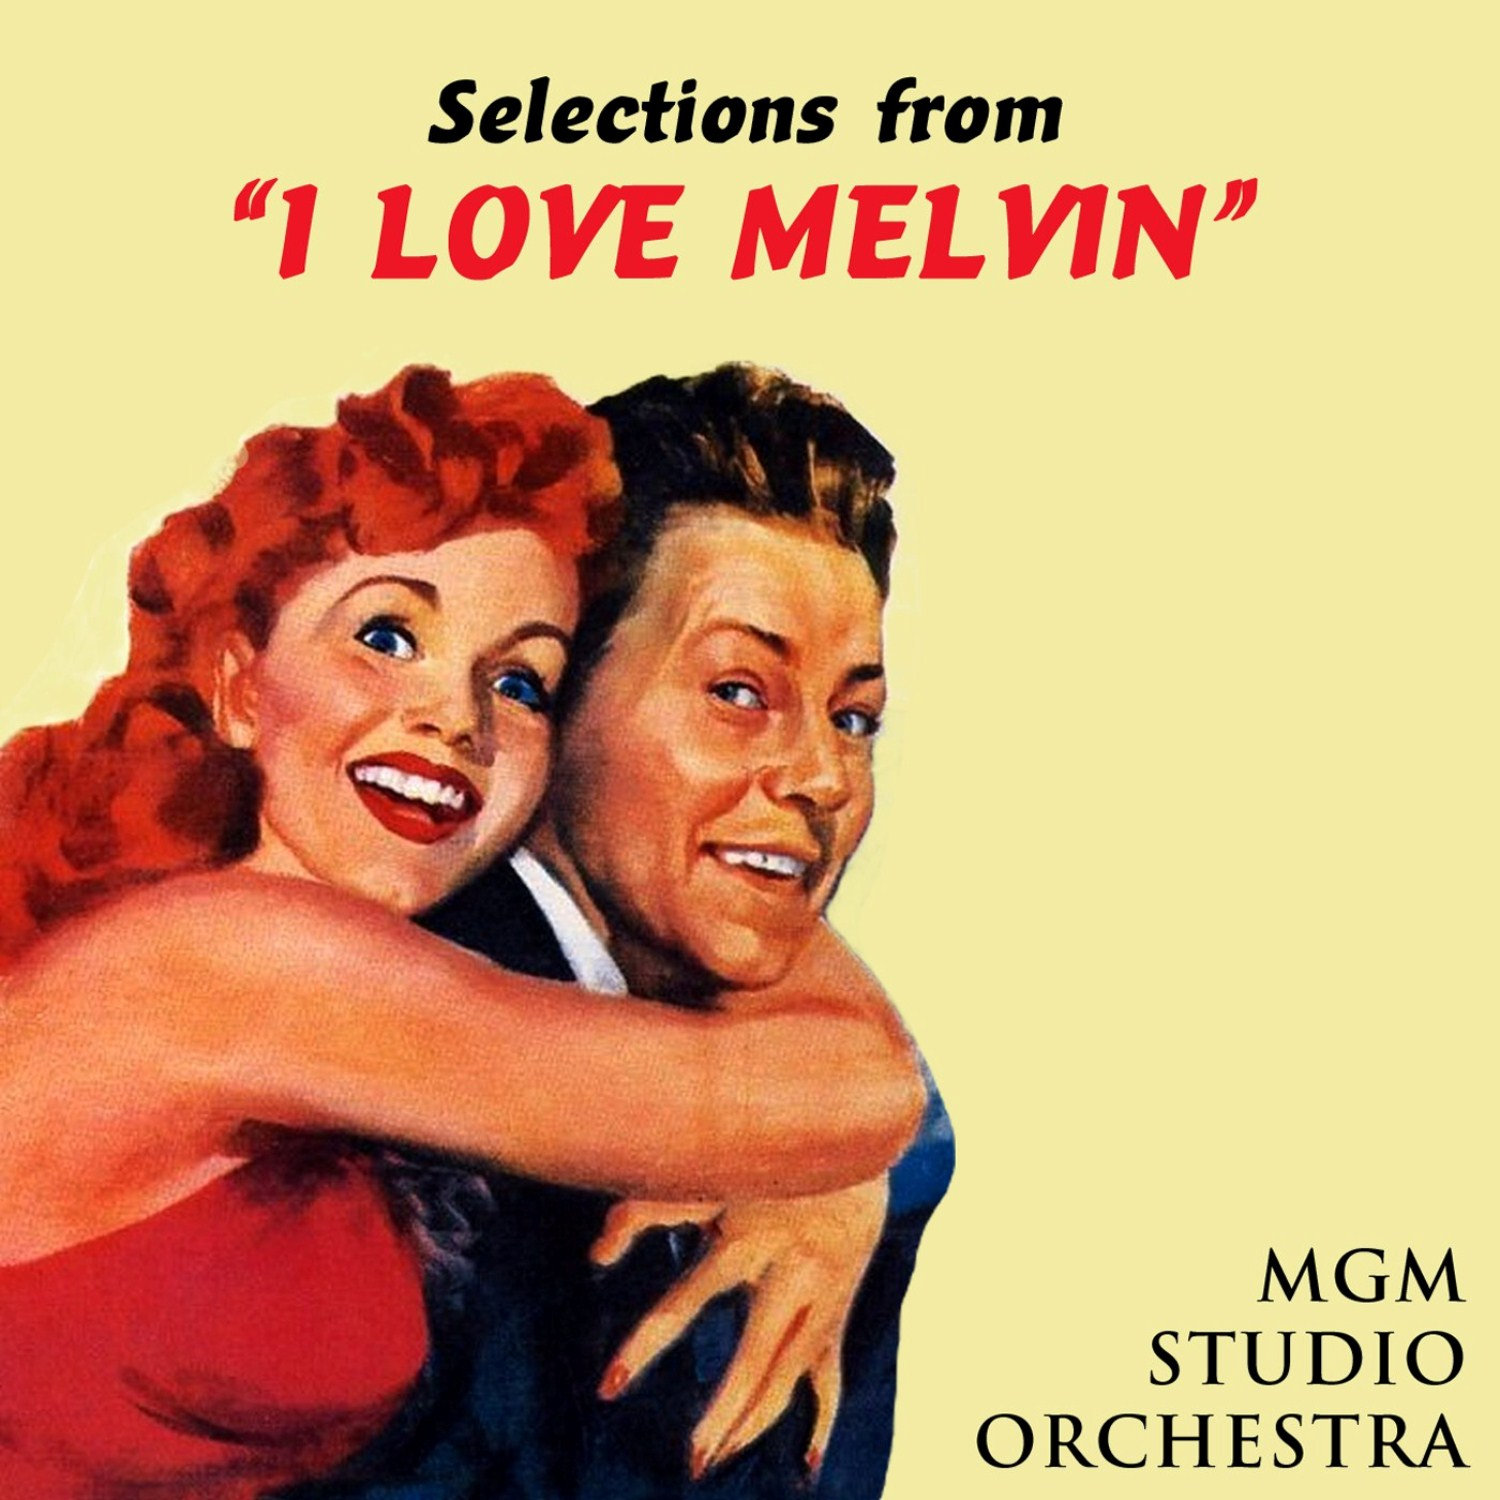 I Love Melvin 1953. I Love Melvin. Mel Love Life. Love Mels. Score soundtrack